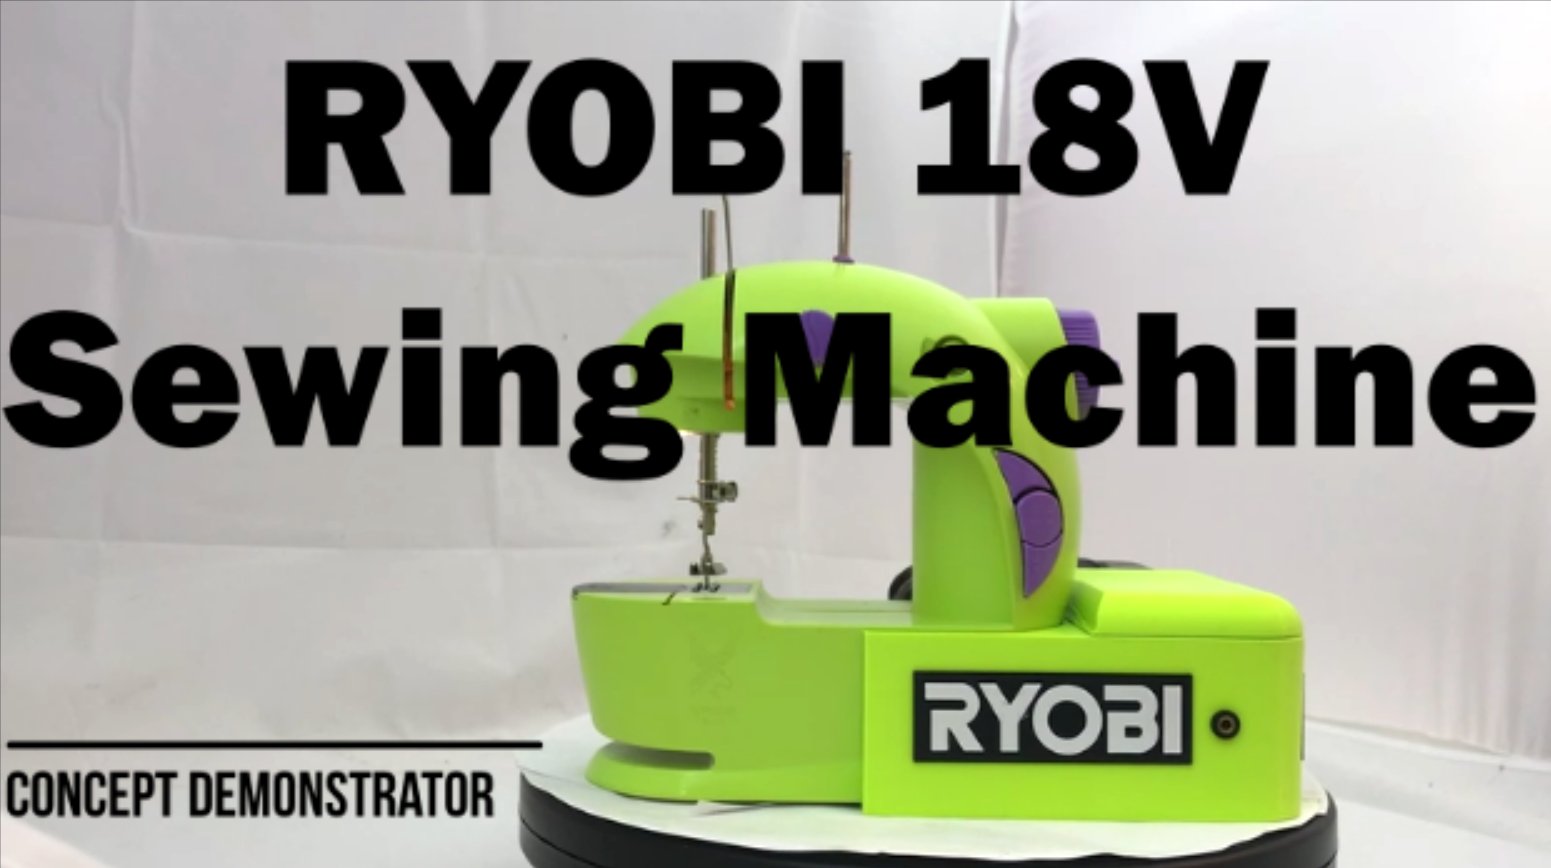 RYOBI 18V Sewing Machine